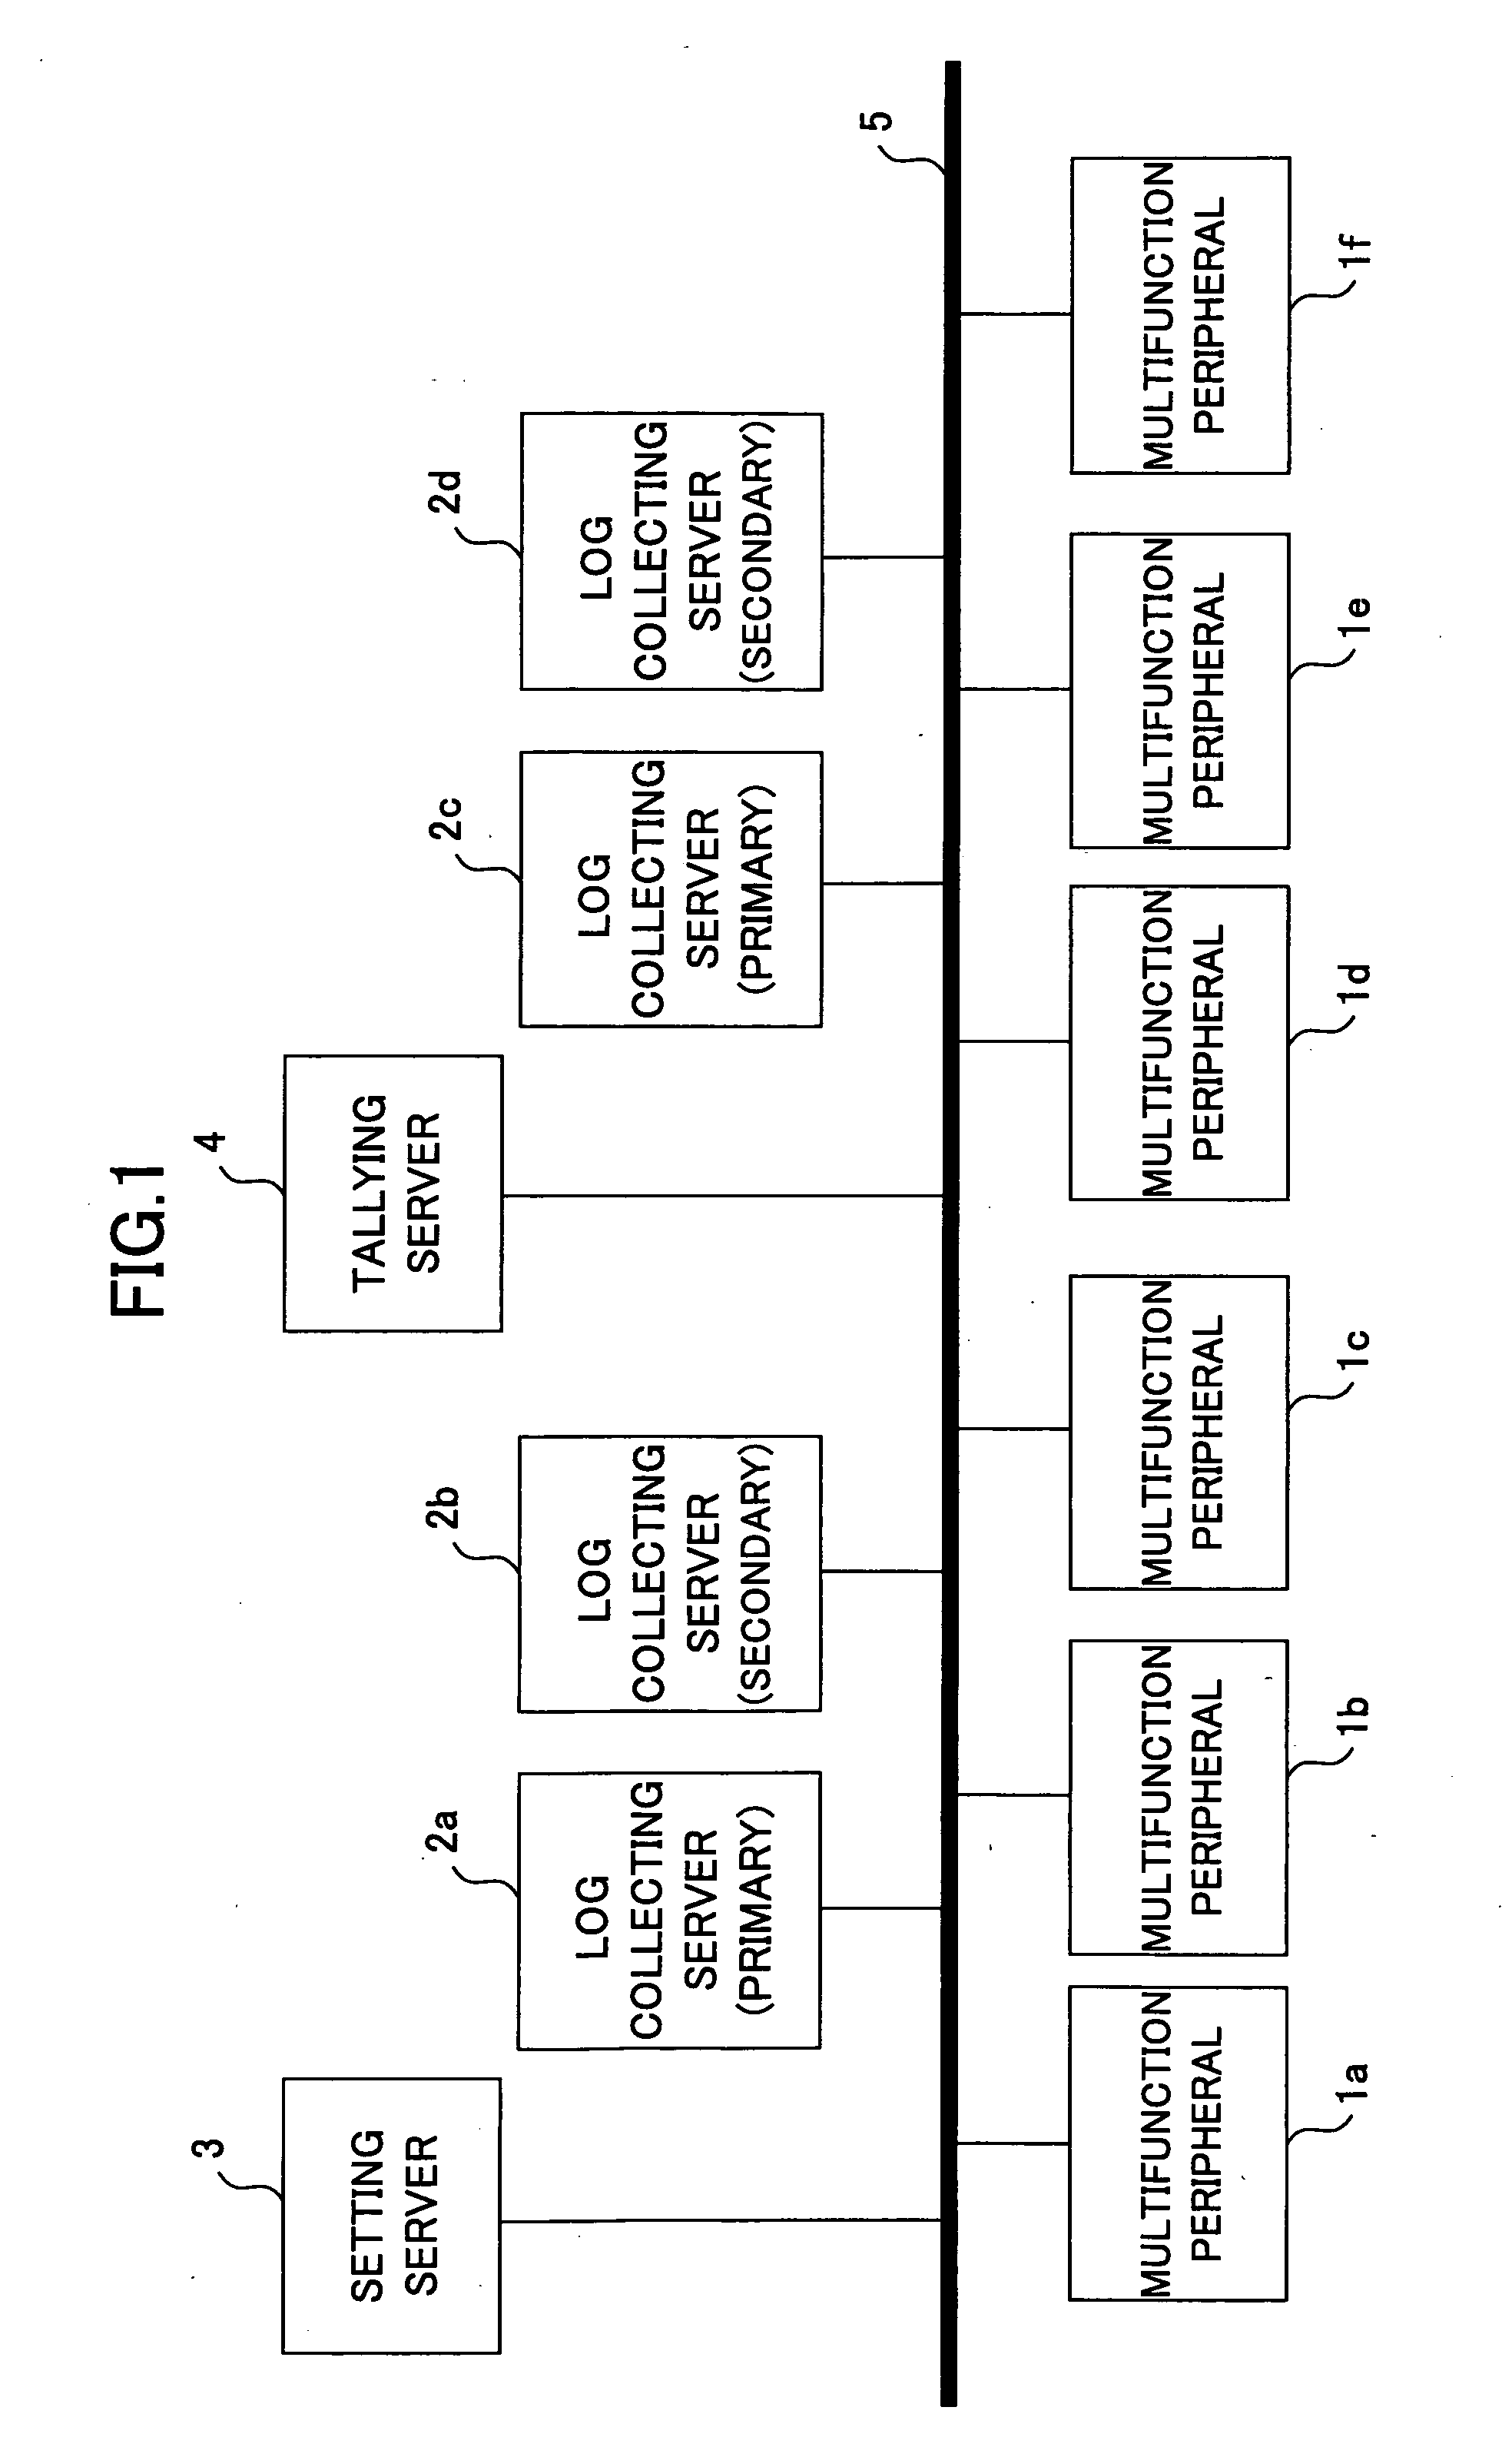 Image forming apparatus transferring log information